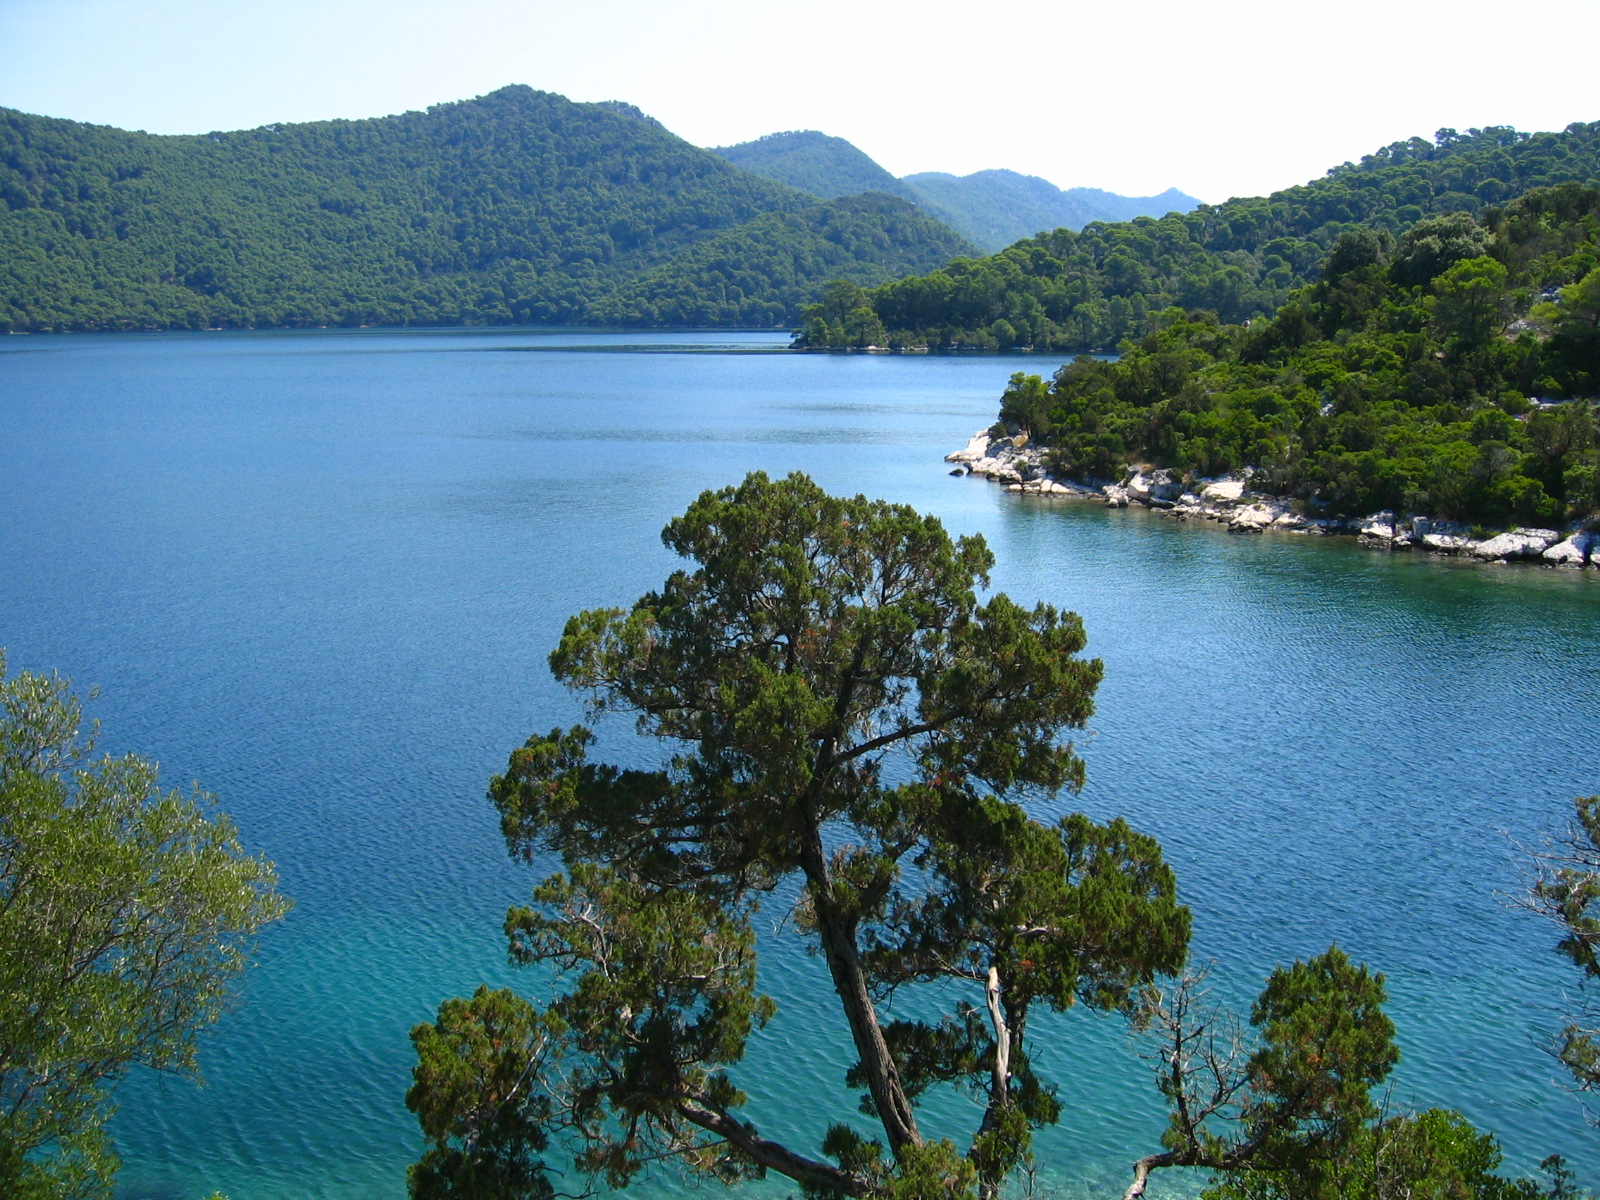 http://4.bp.blogspot.com/-M_Cx5gYJ5PA/TwLvrJUrxkI/AAAAAAAADBo/McSC4giqOXg/s1600/Great_Lake%252C_Island_of_Mljet%252C_Croatia.JPG